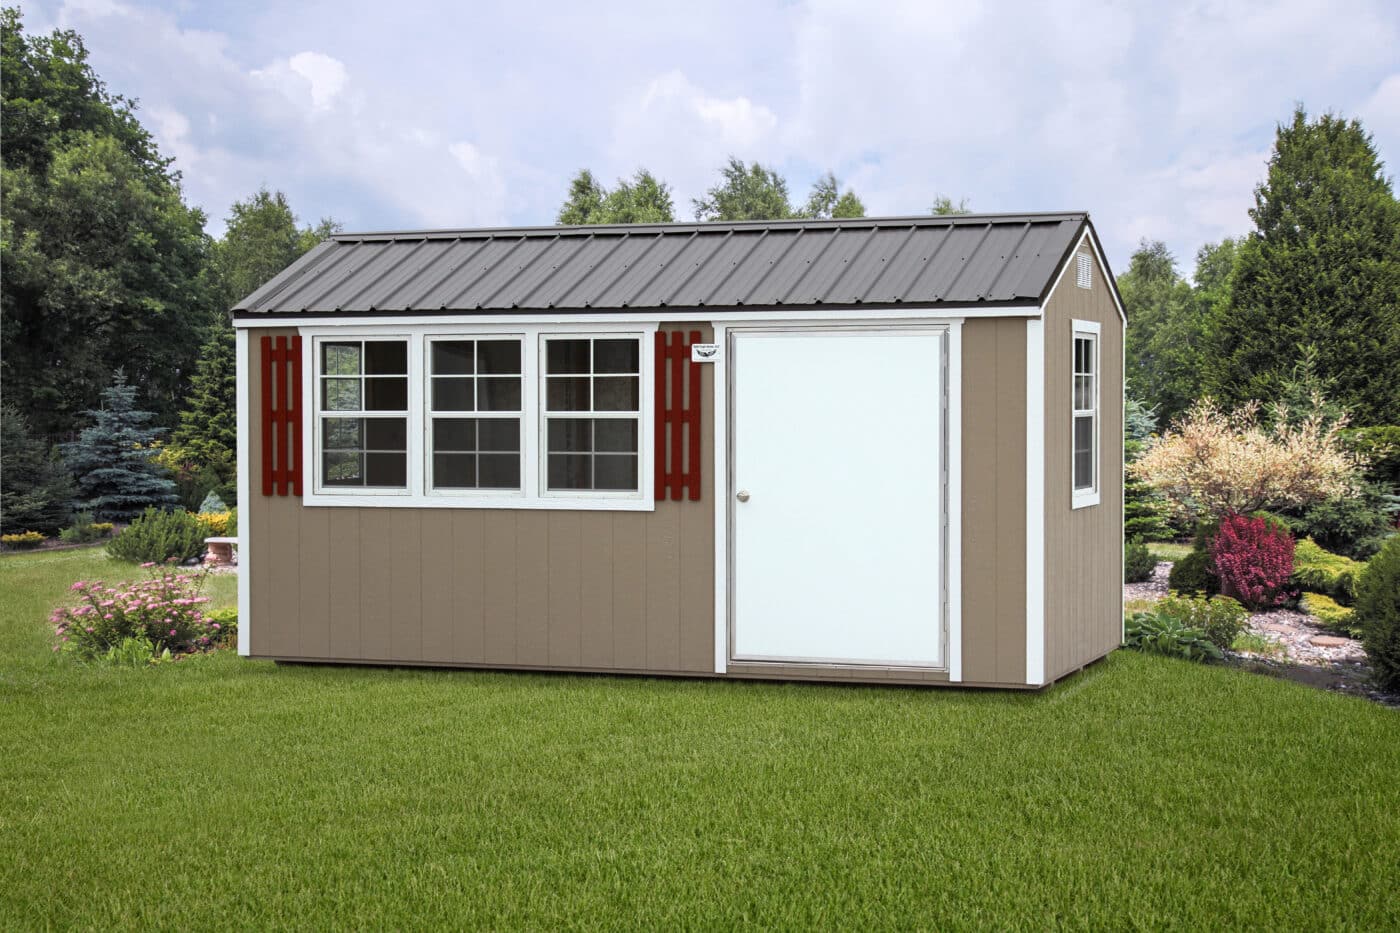 custom shed options doors and windows